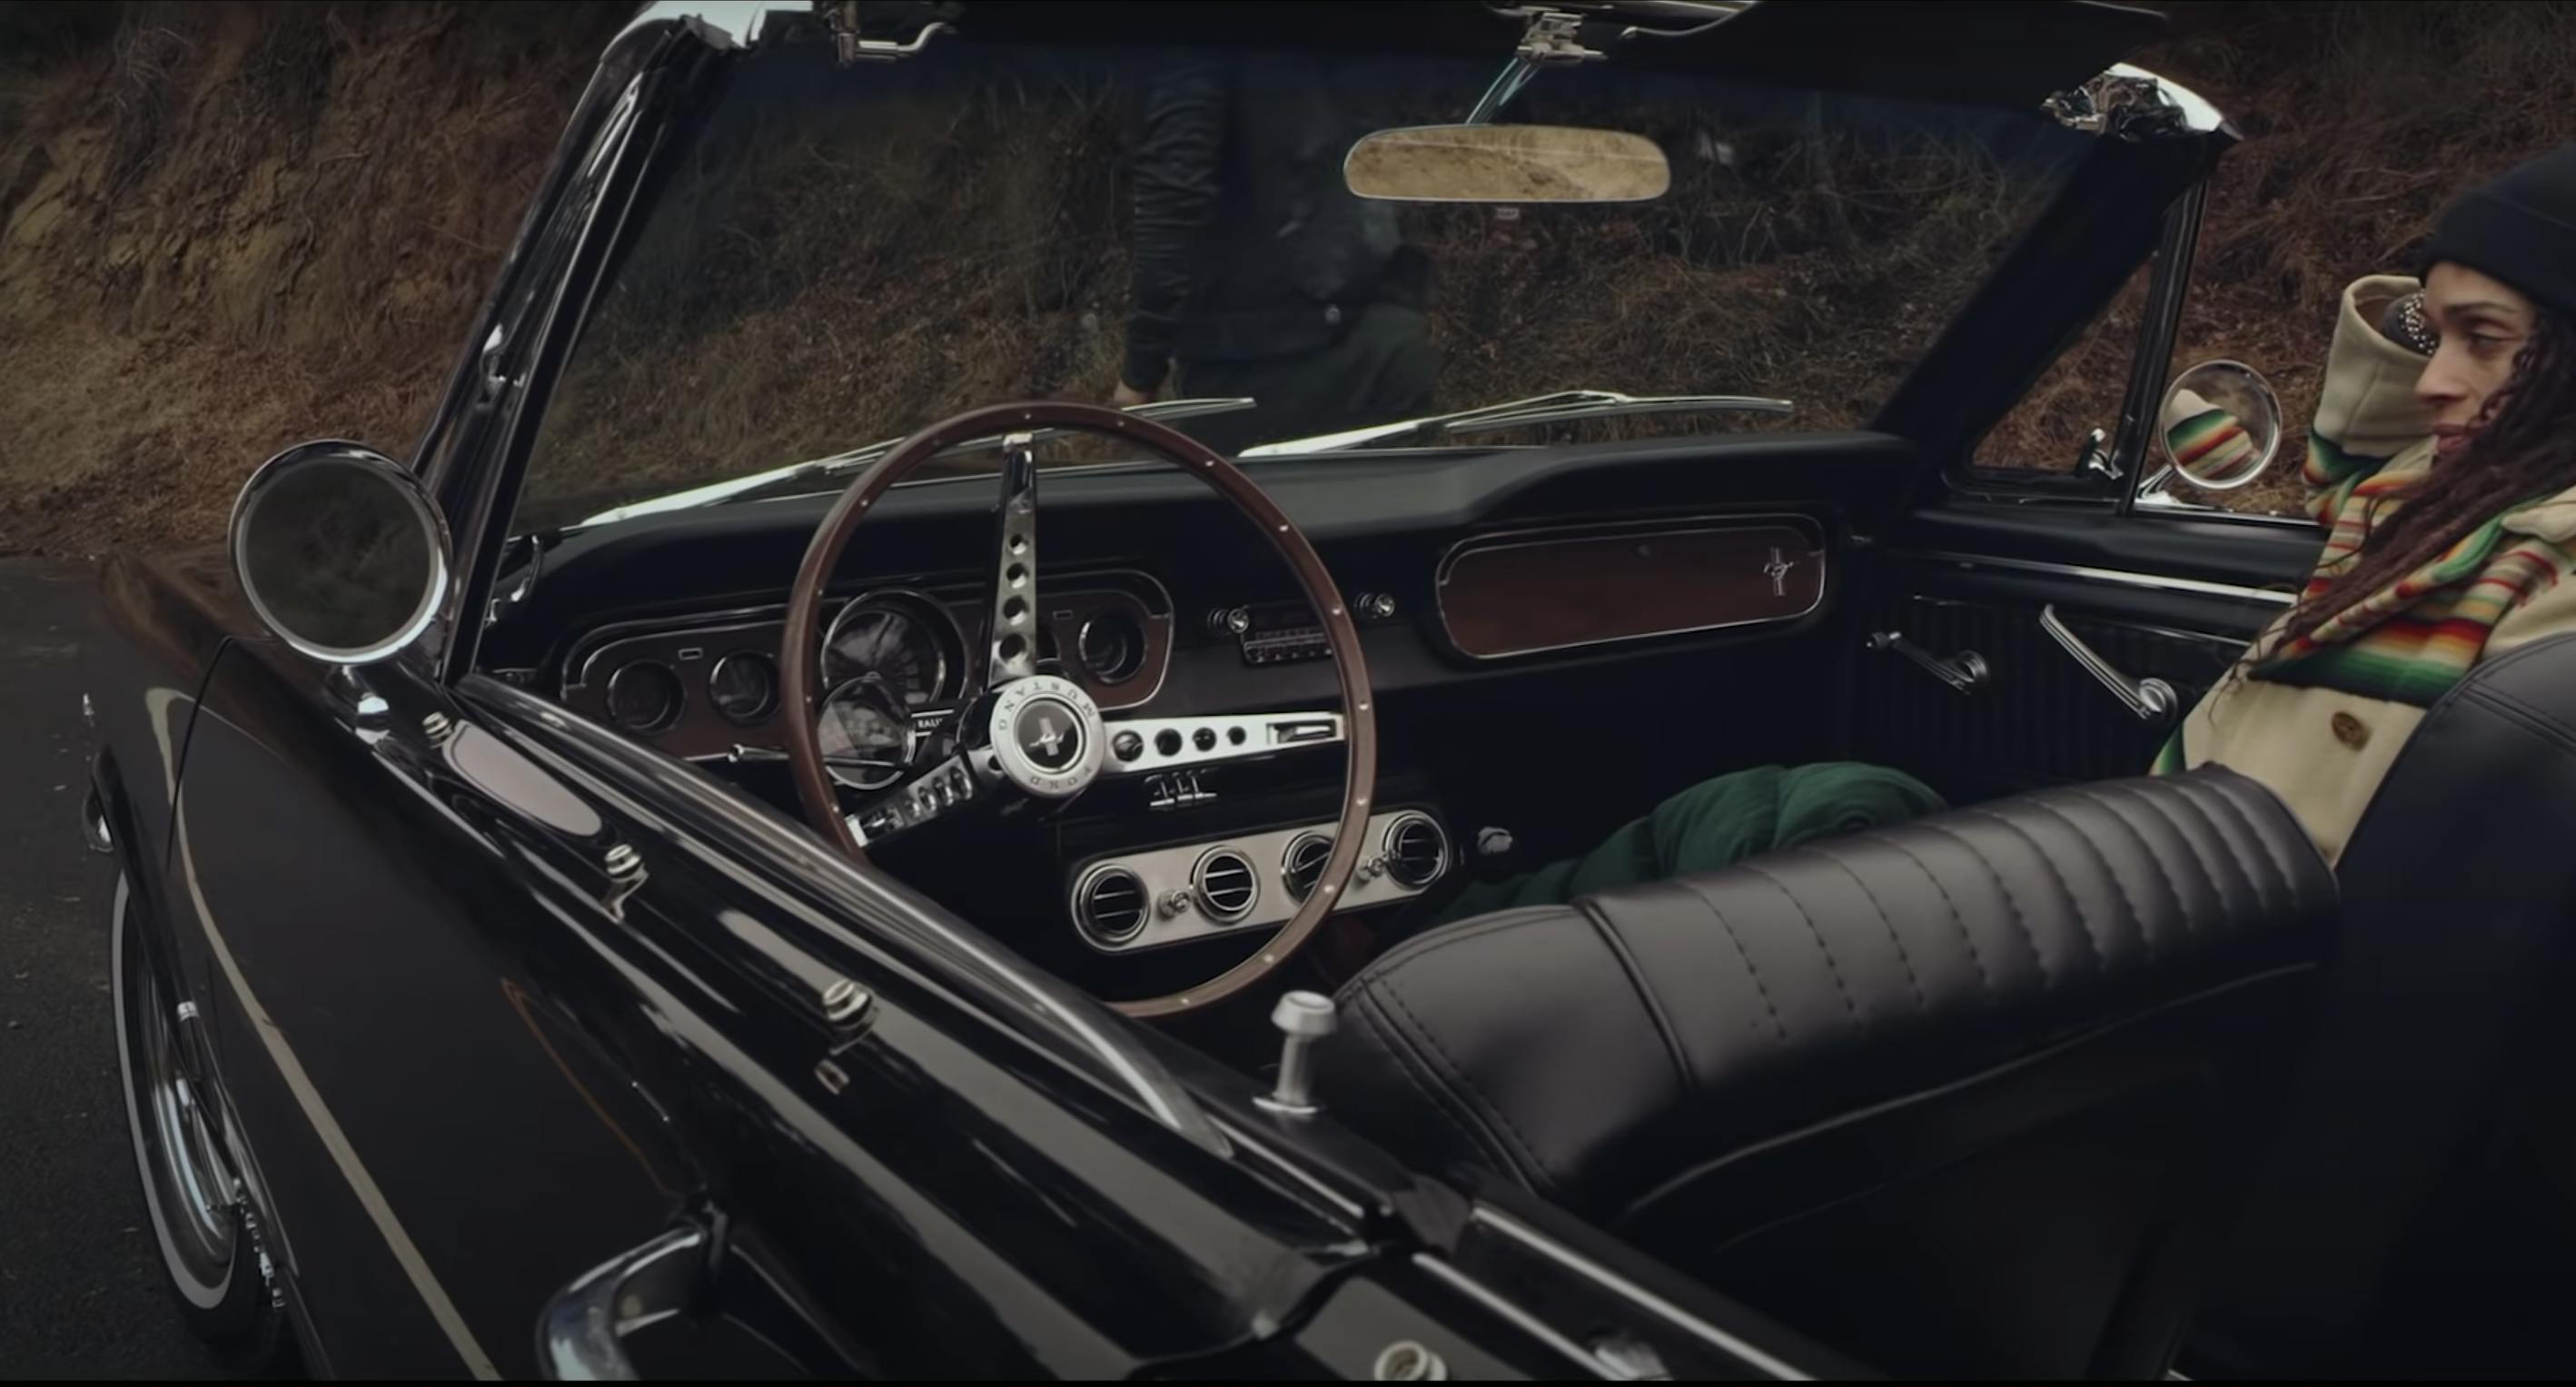 Jason Momoa Lisa Bonet 1965 Mustang restoration Divine 1 customs